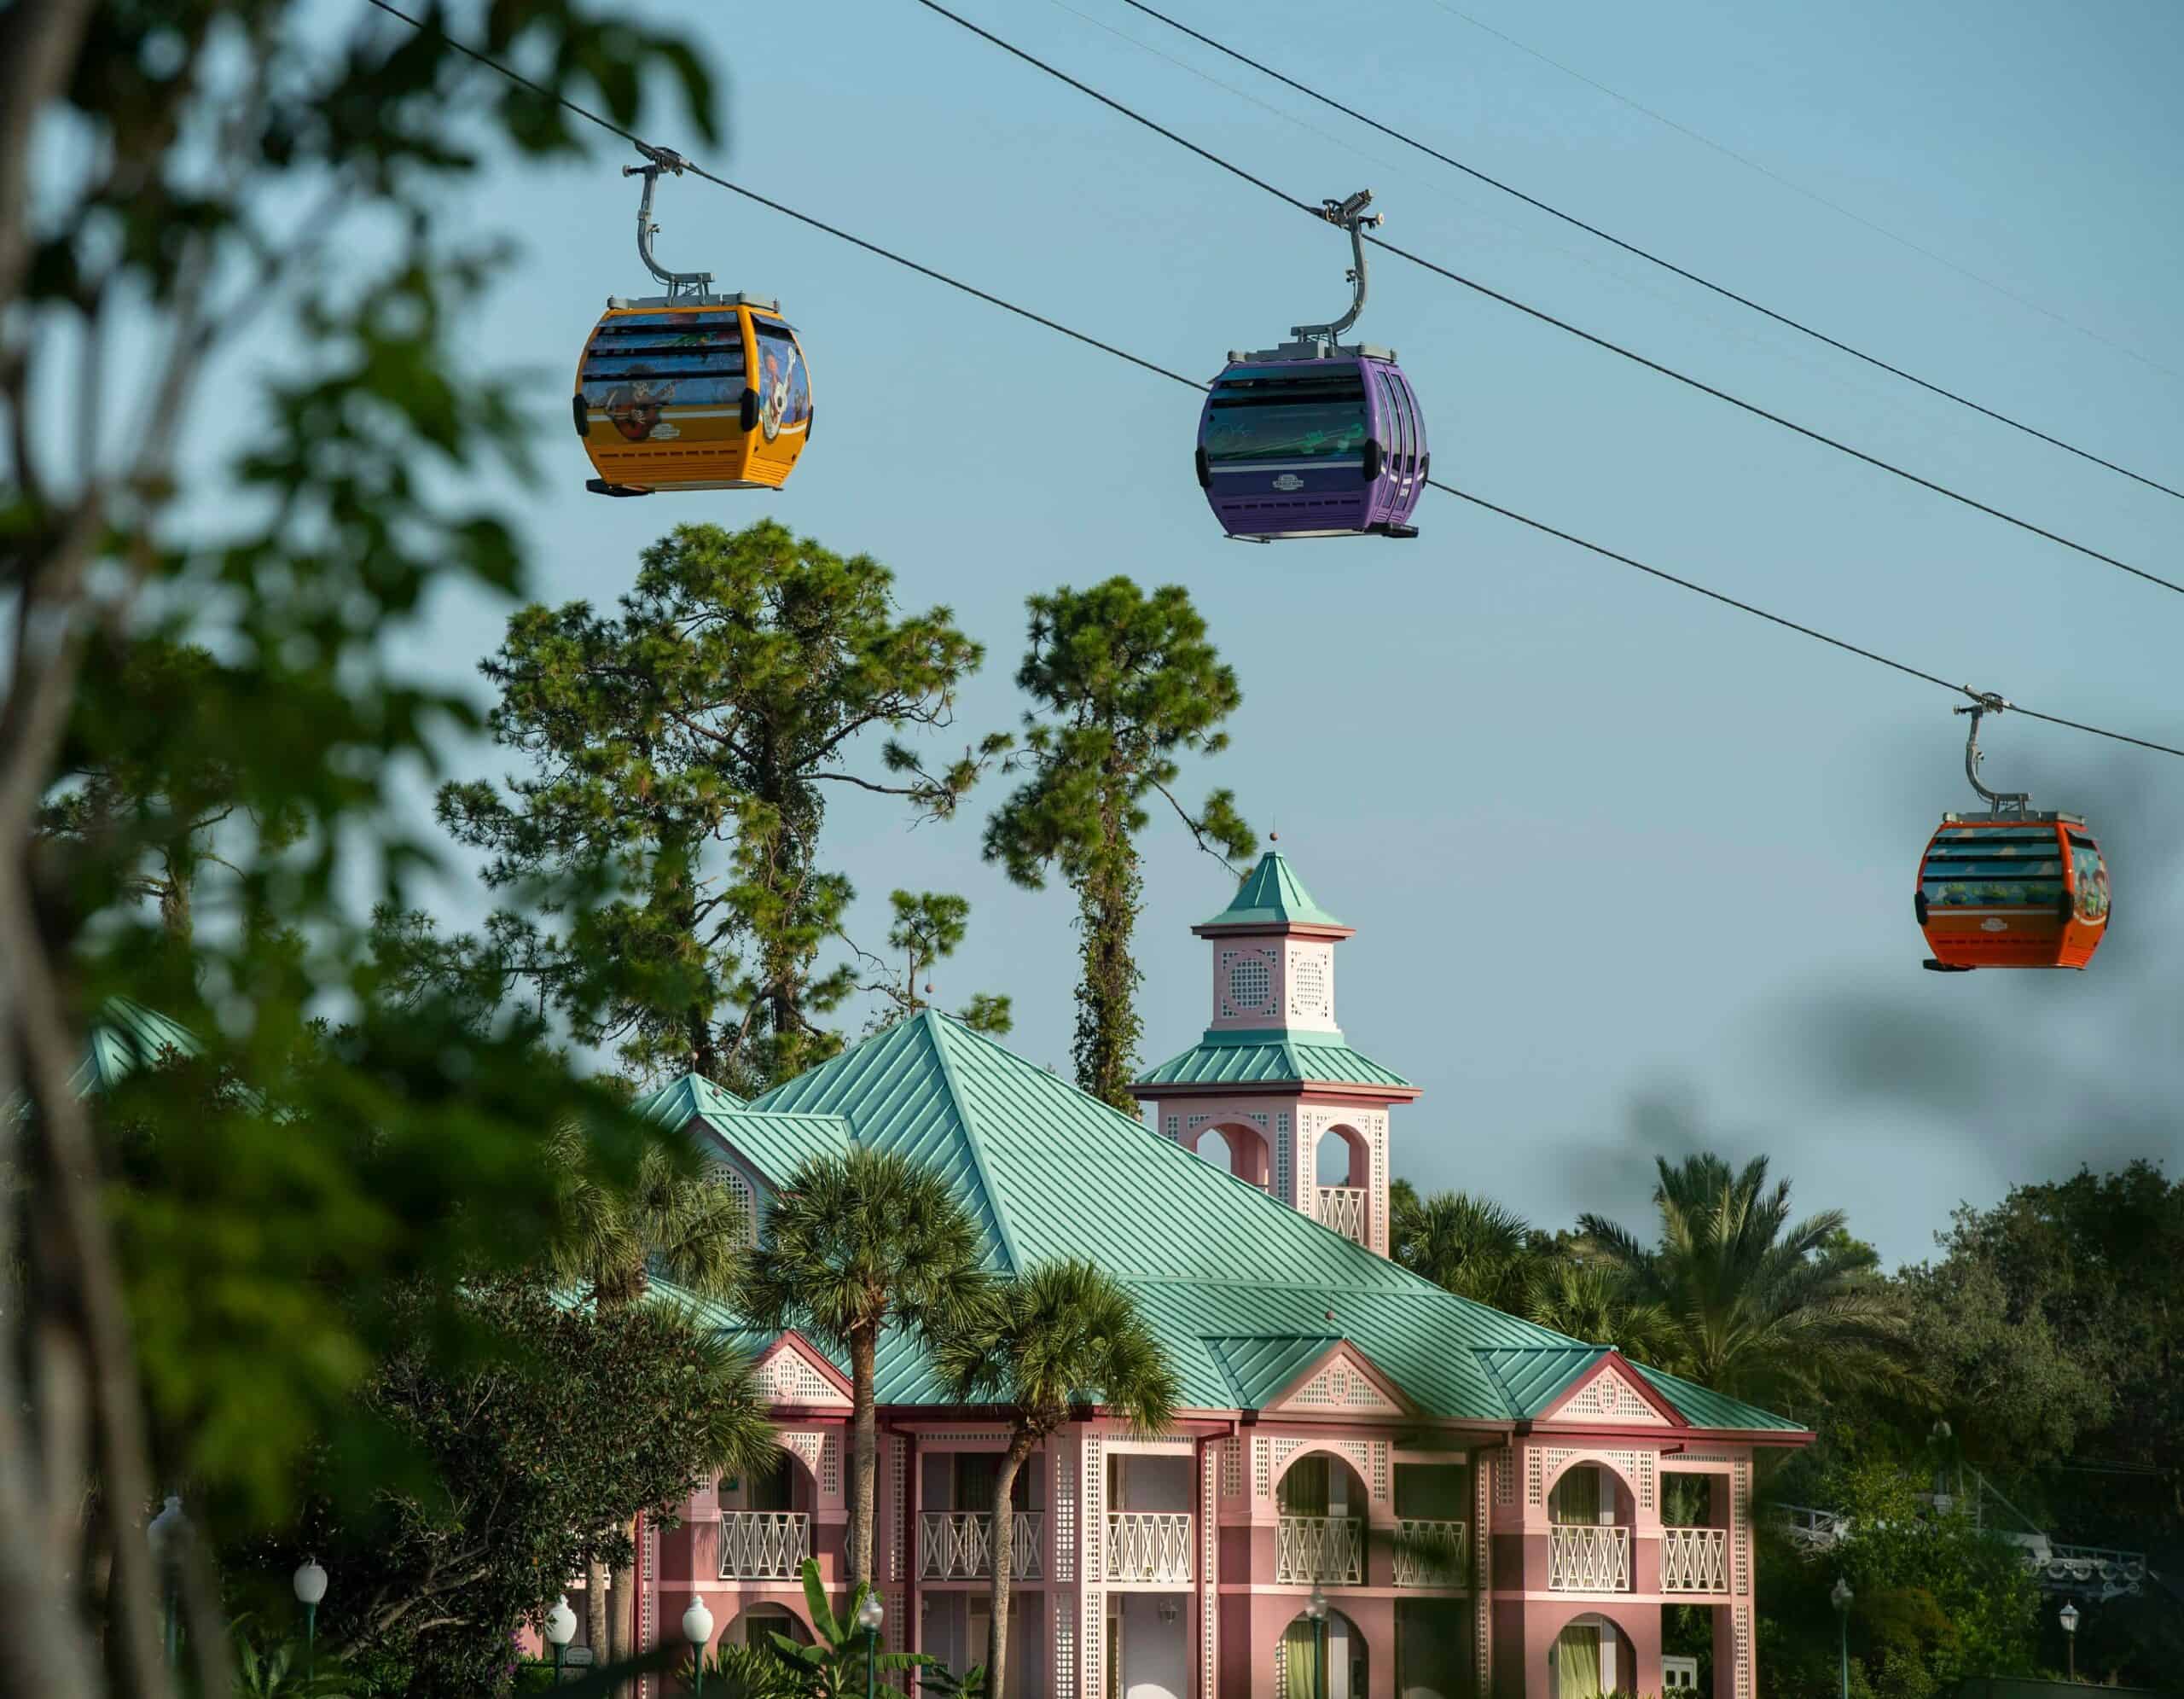 Three Disney Skyliner gondolas glide along their cables above Disney's Caribbean Beach resort